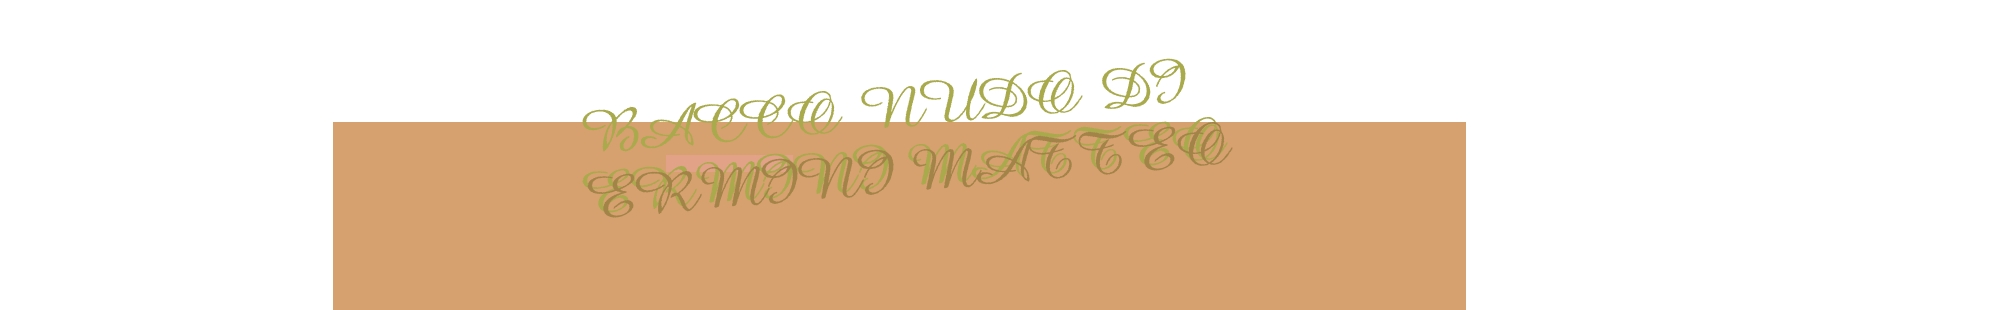 logo Bacco Nudo di Ermini Matteo